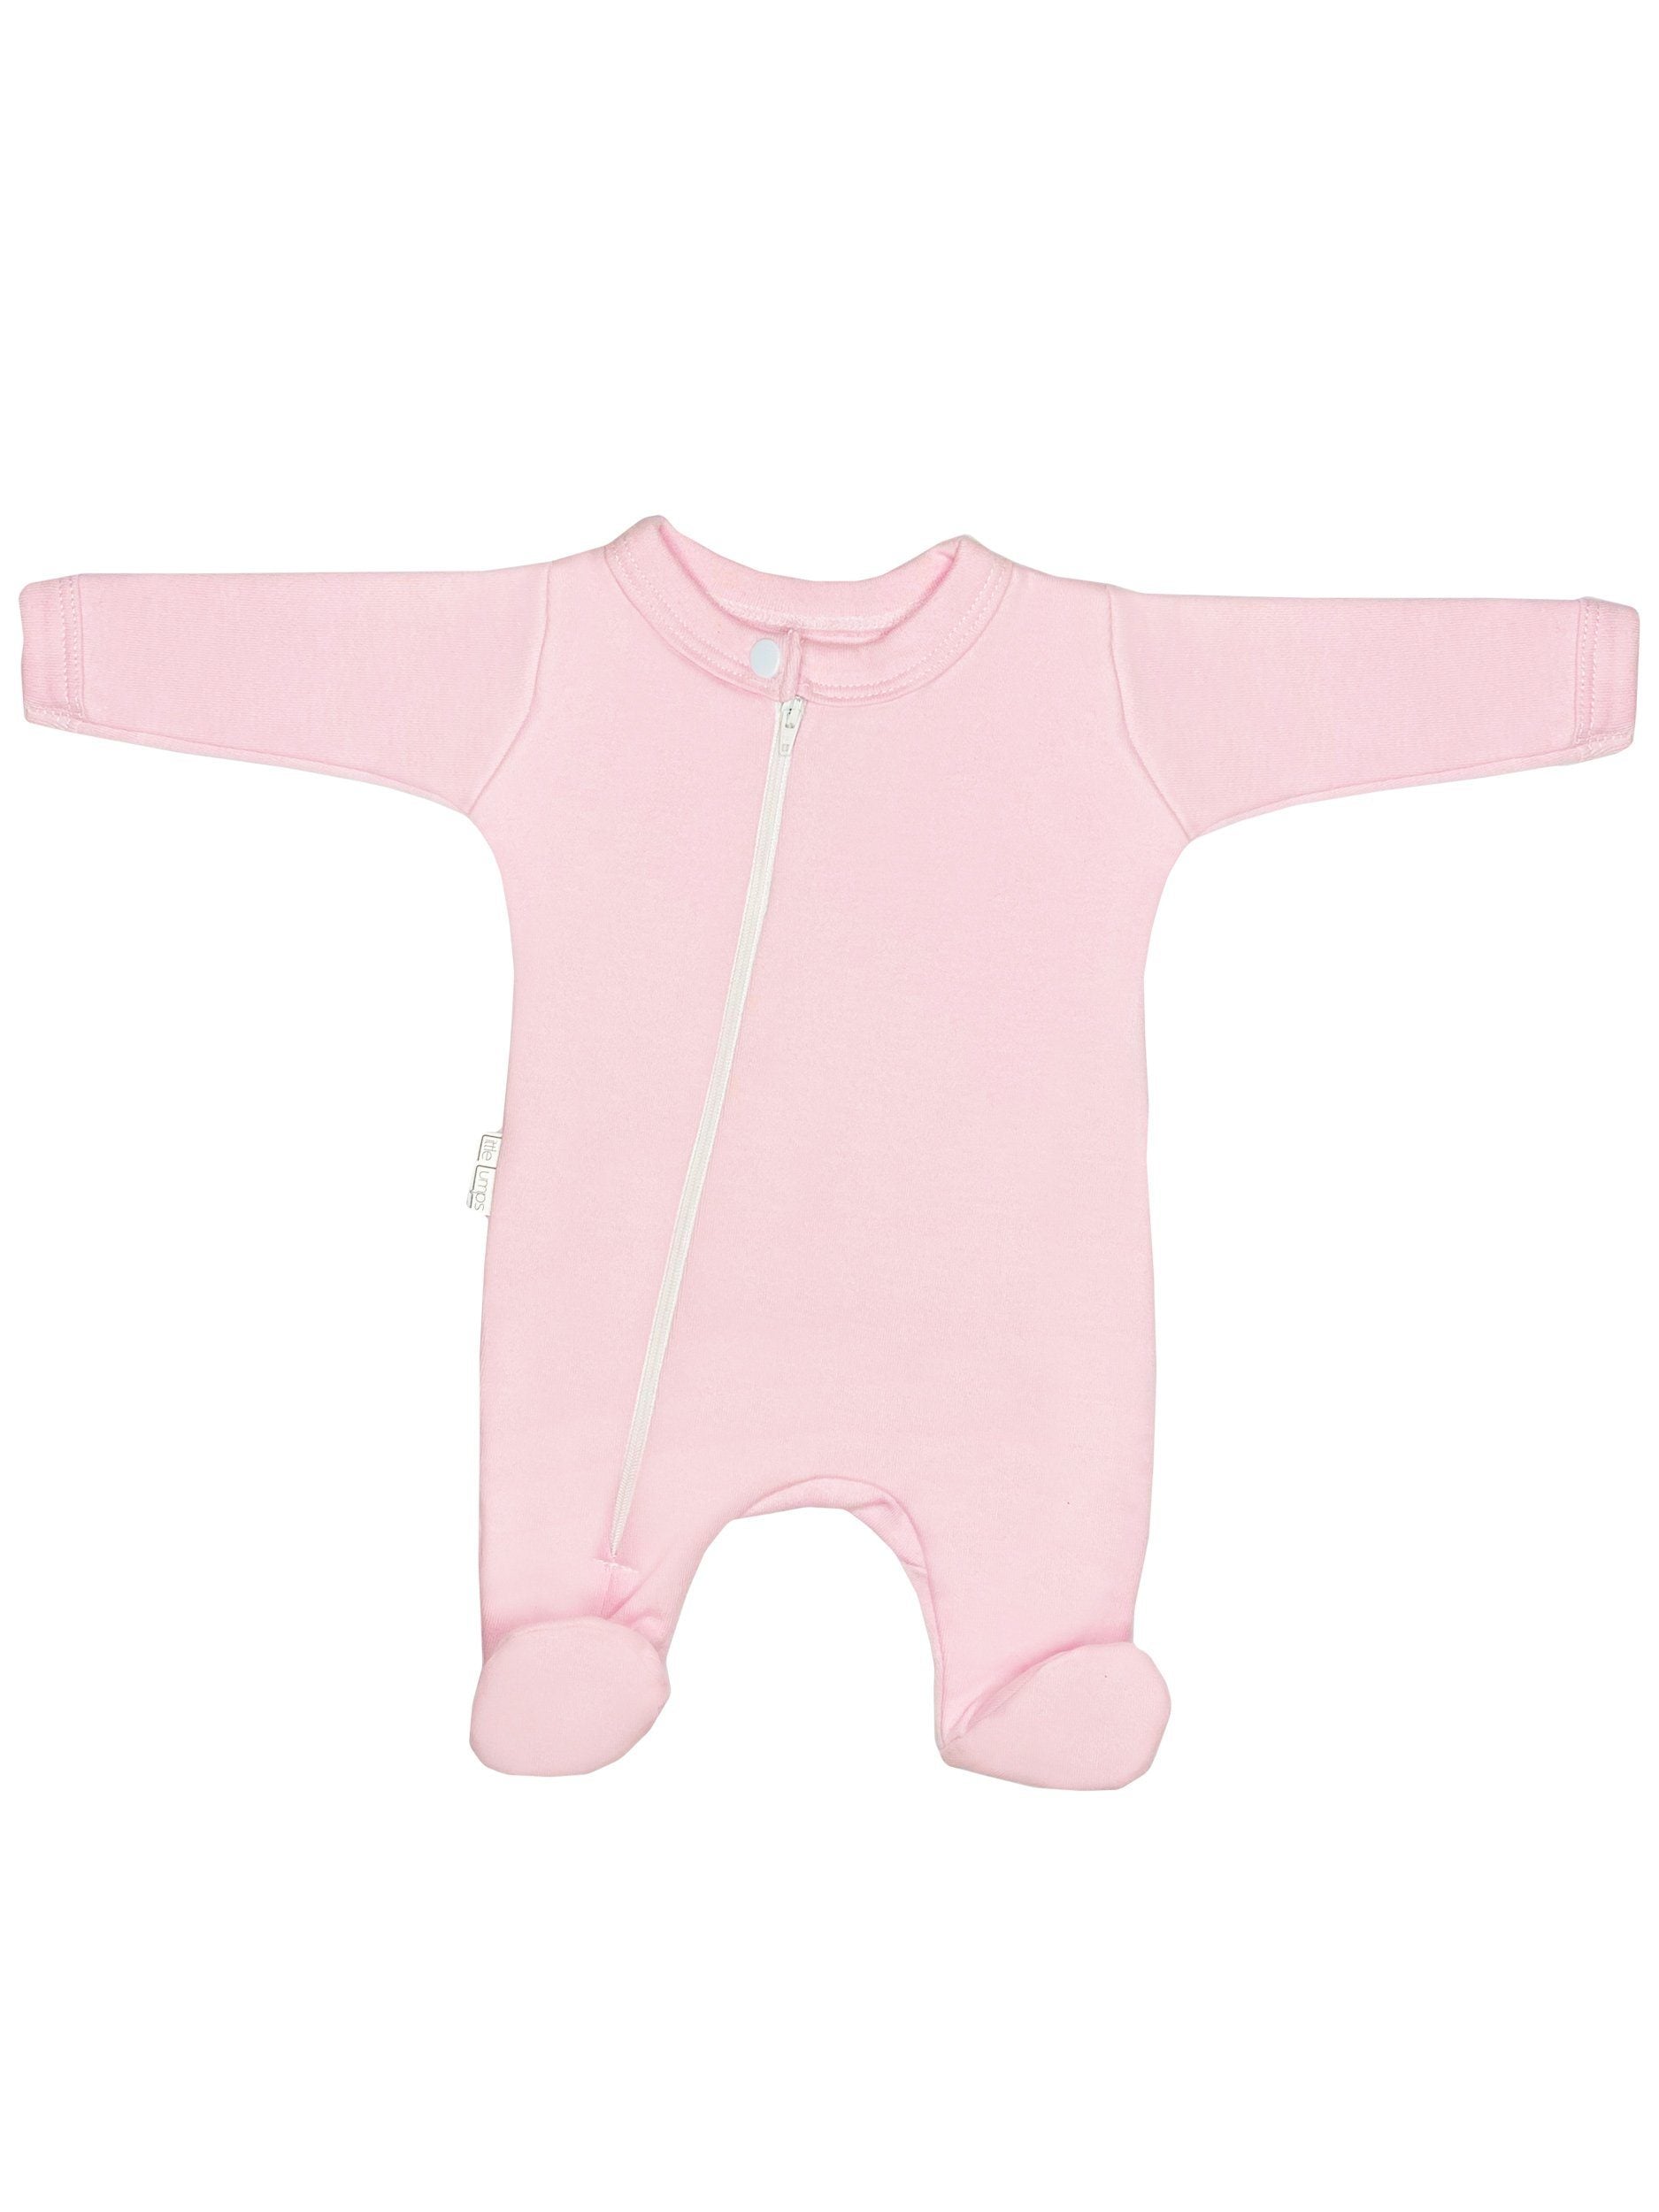 100% Cotton Footed Zip Up Sleepsuit - Pink Sleepsuit / Babygrow Little Lumps 